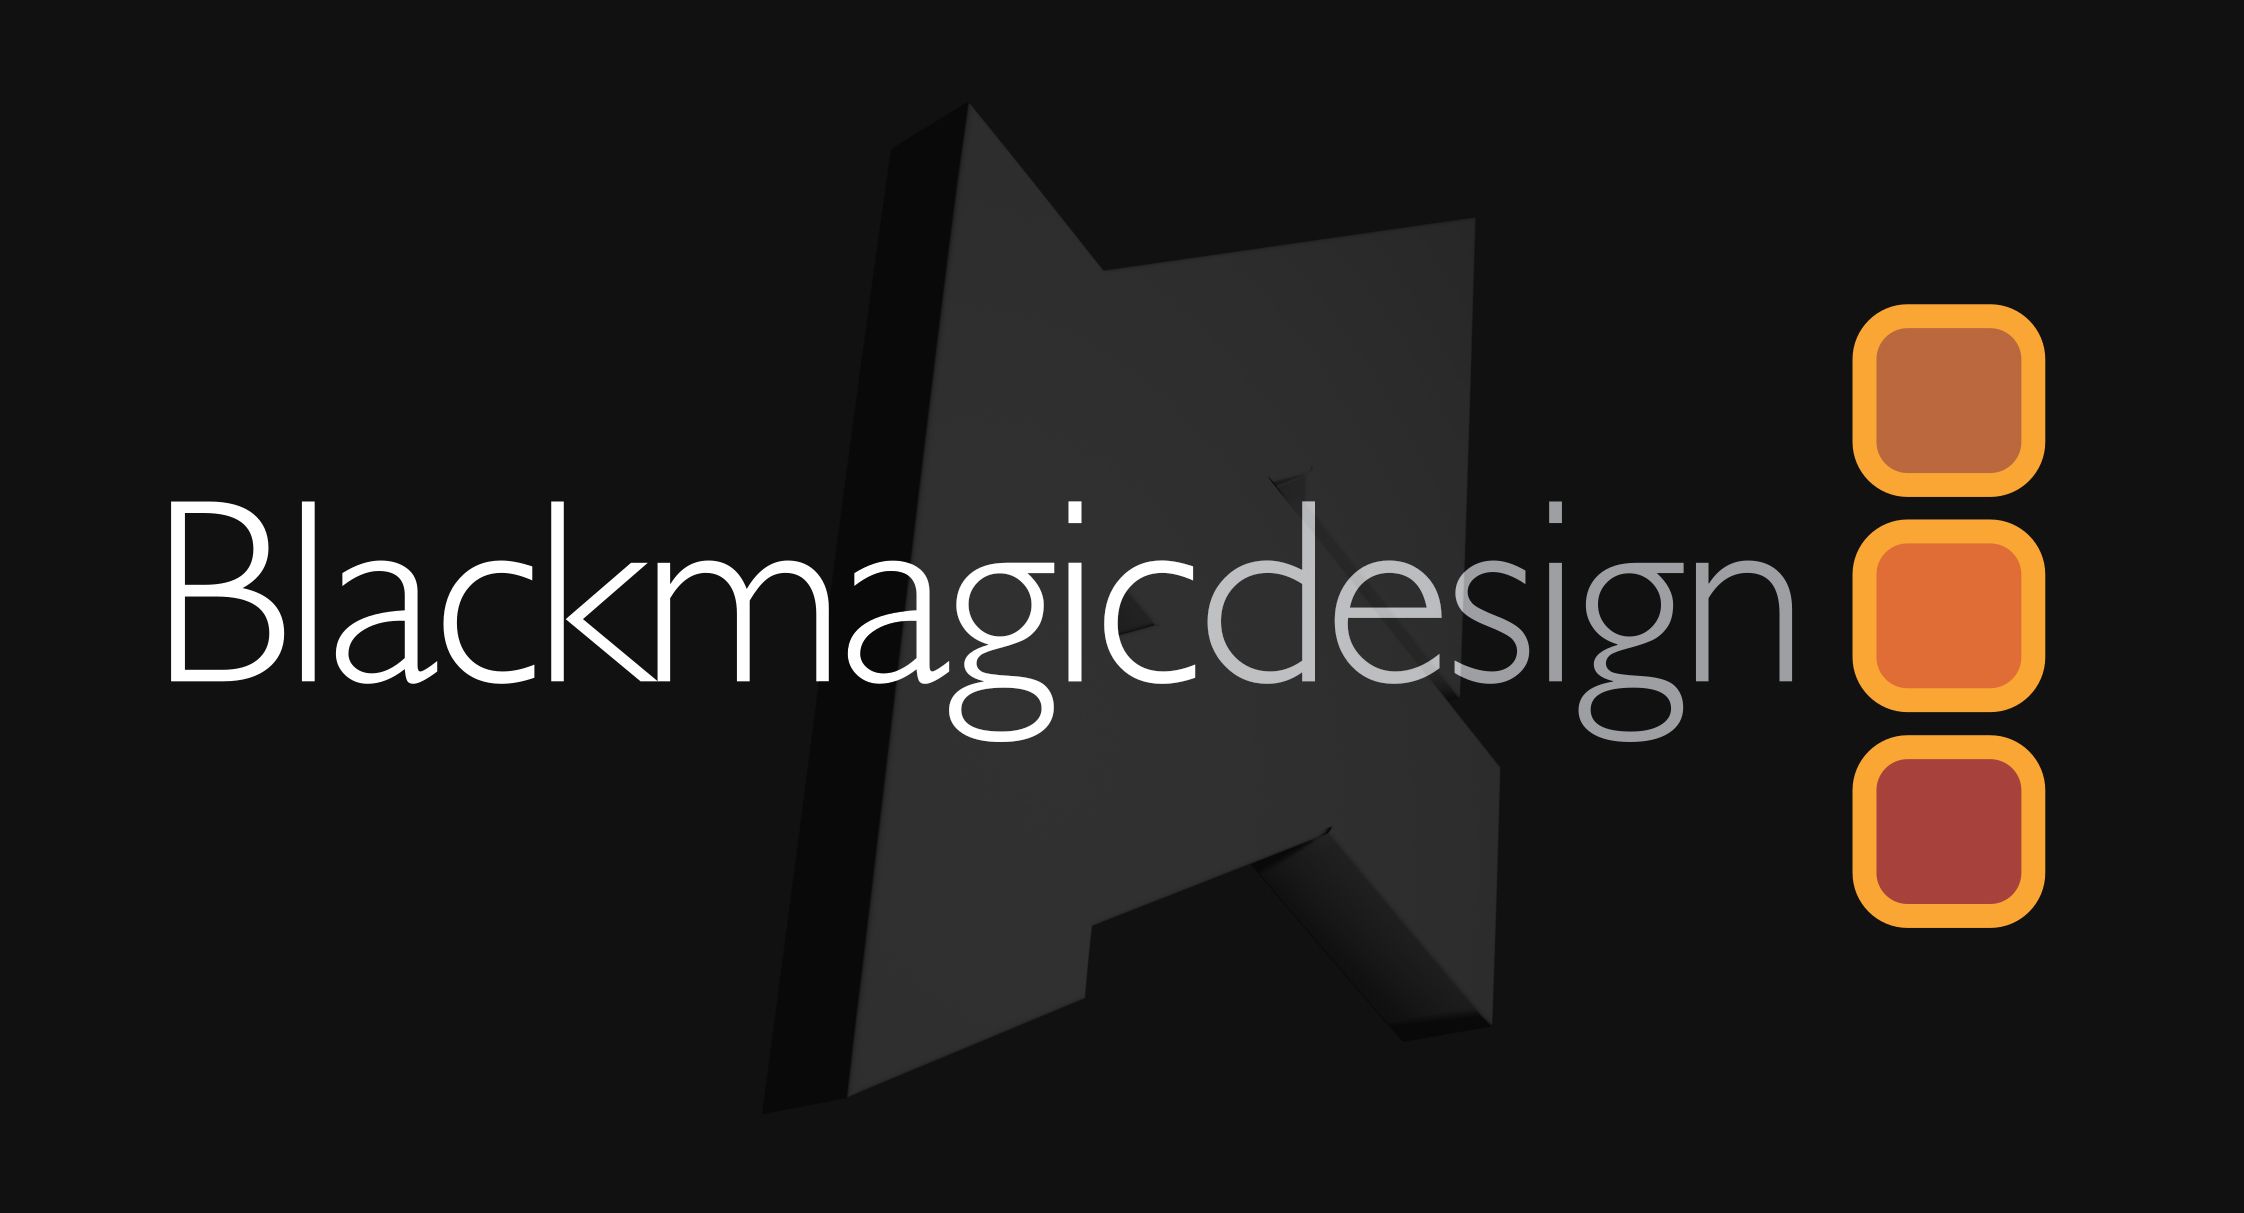 Logotipo da Blackmagic Design com logotipo da AP ao fundo